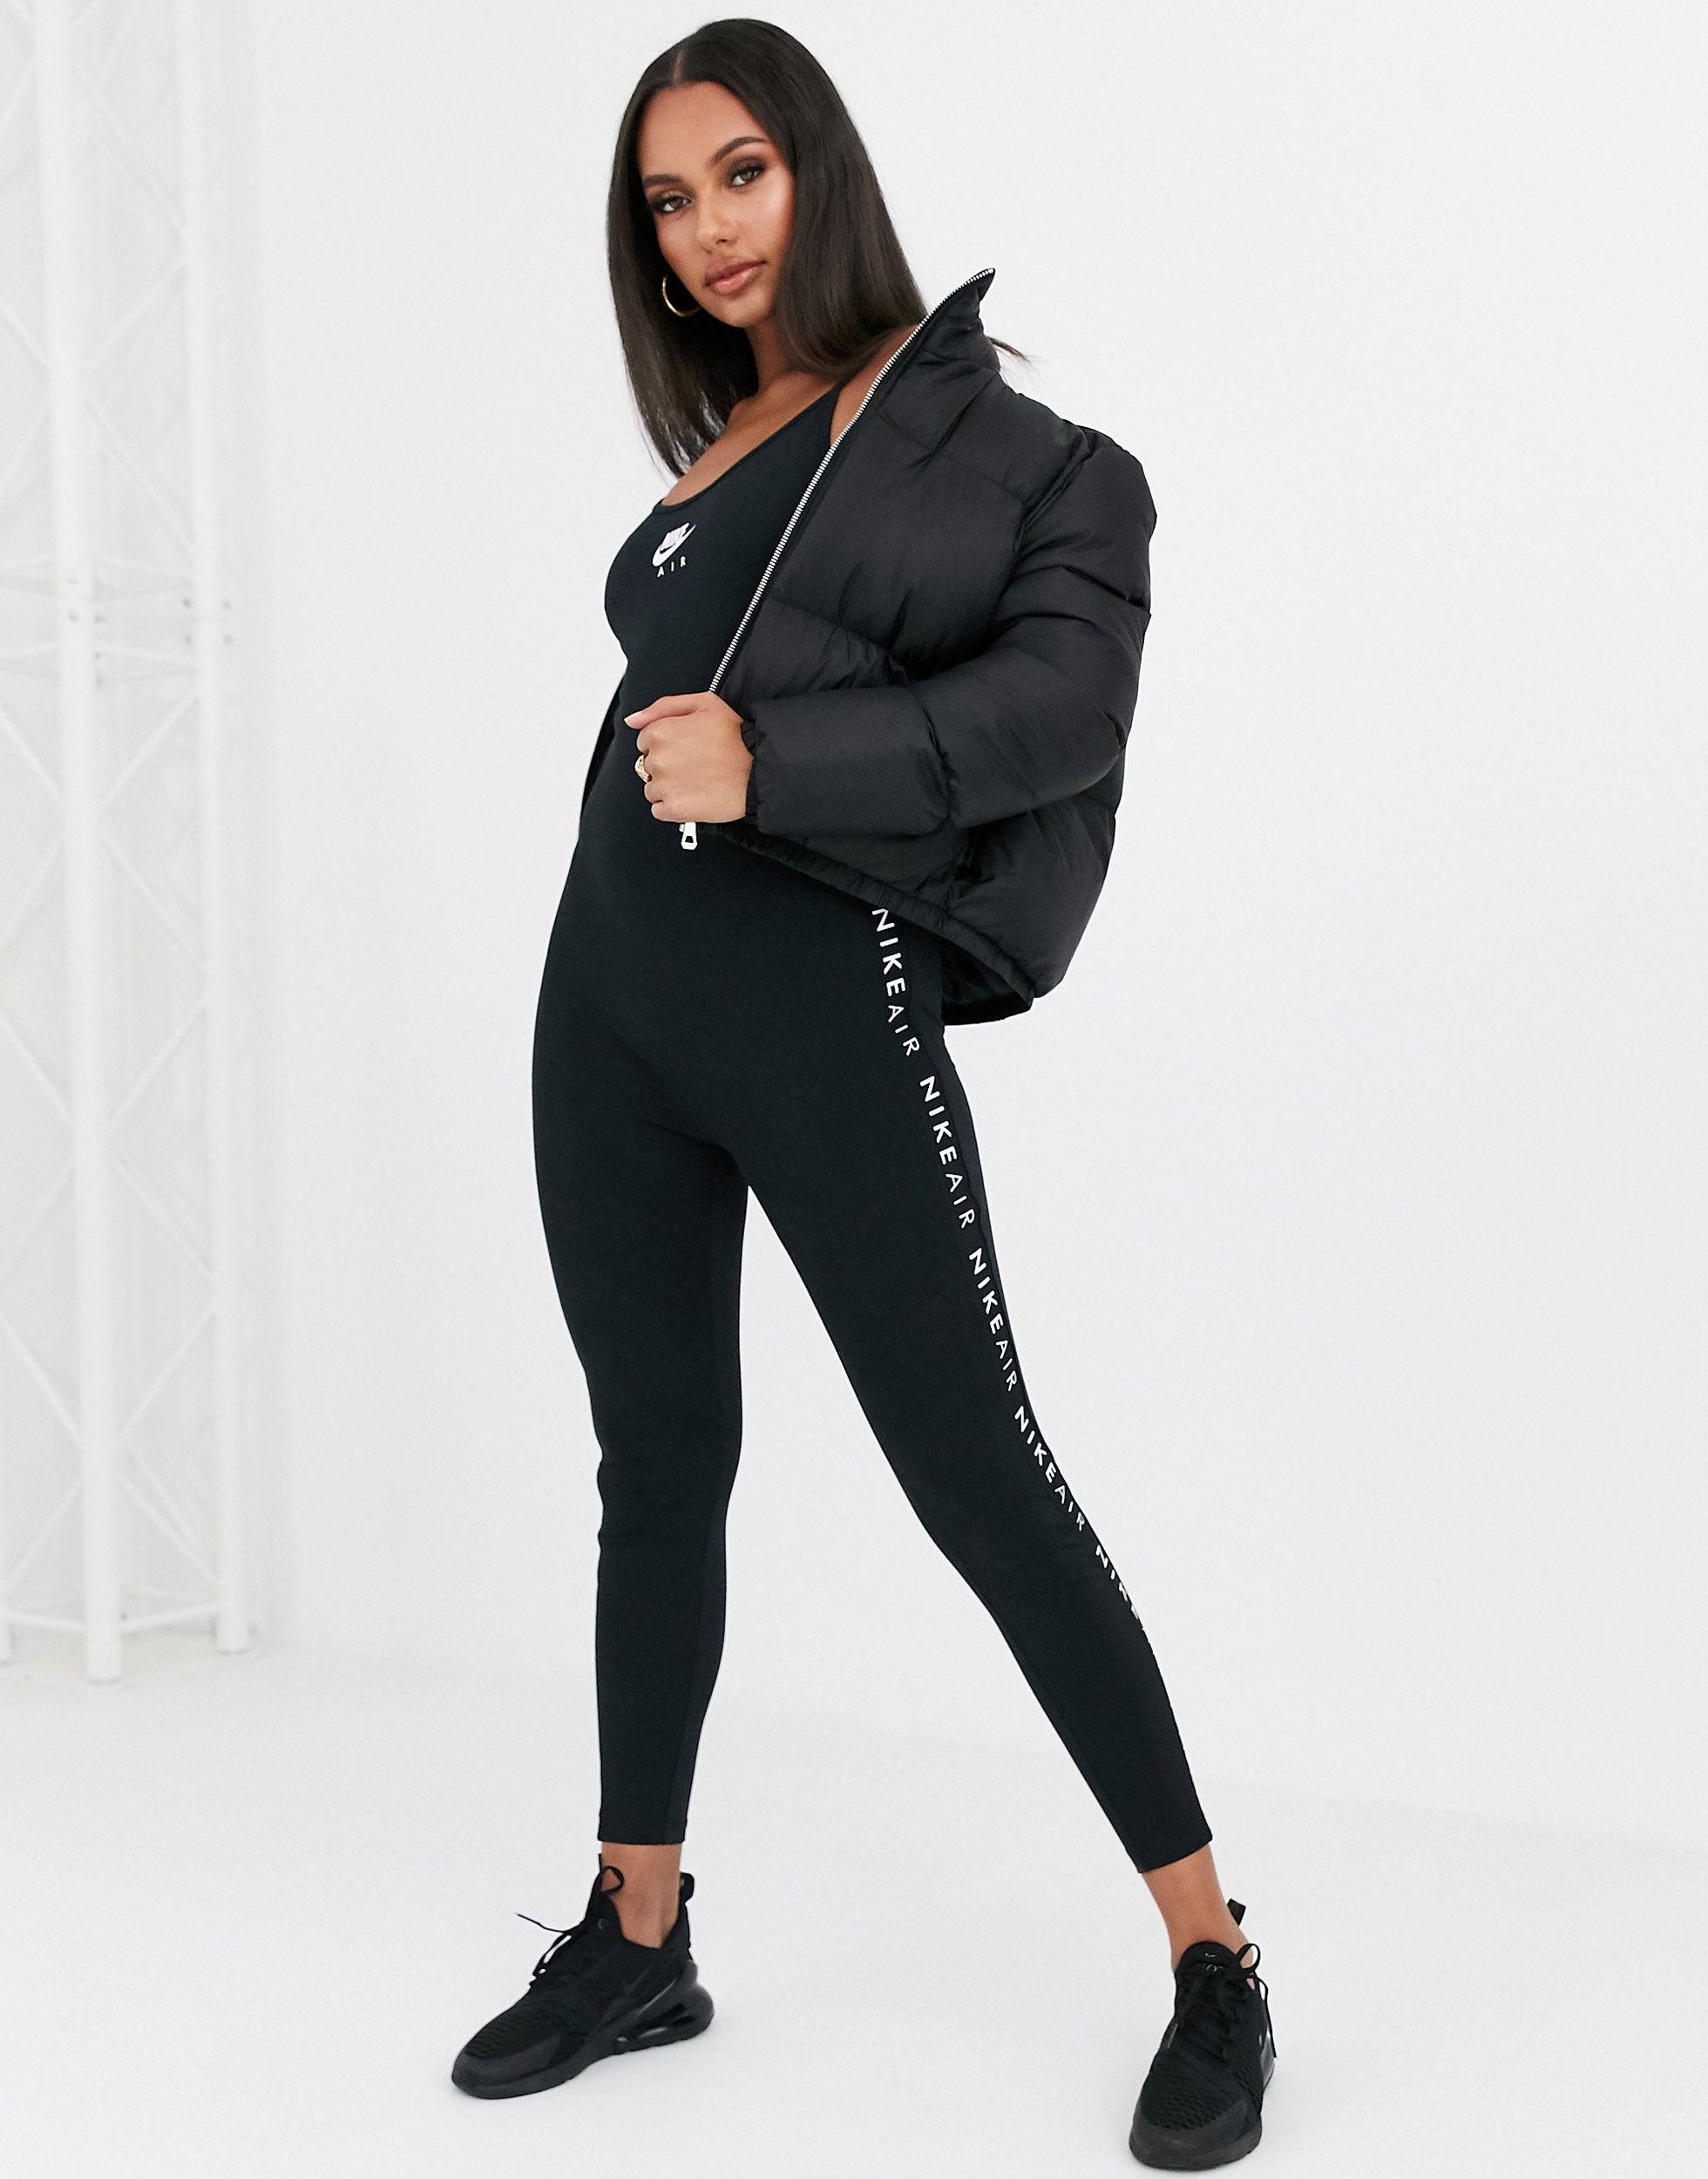 at opfinde Indica hylde Nike Air Black Unitard Jumpsuit | Lyst